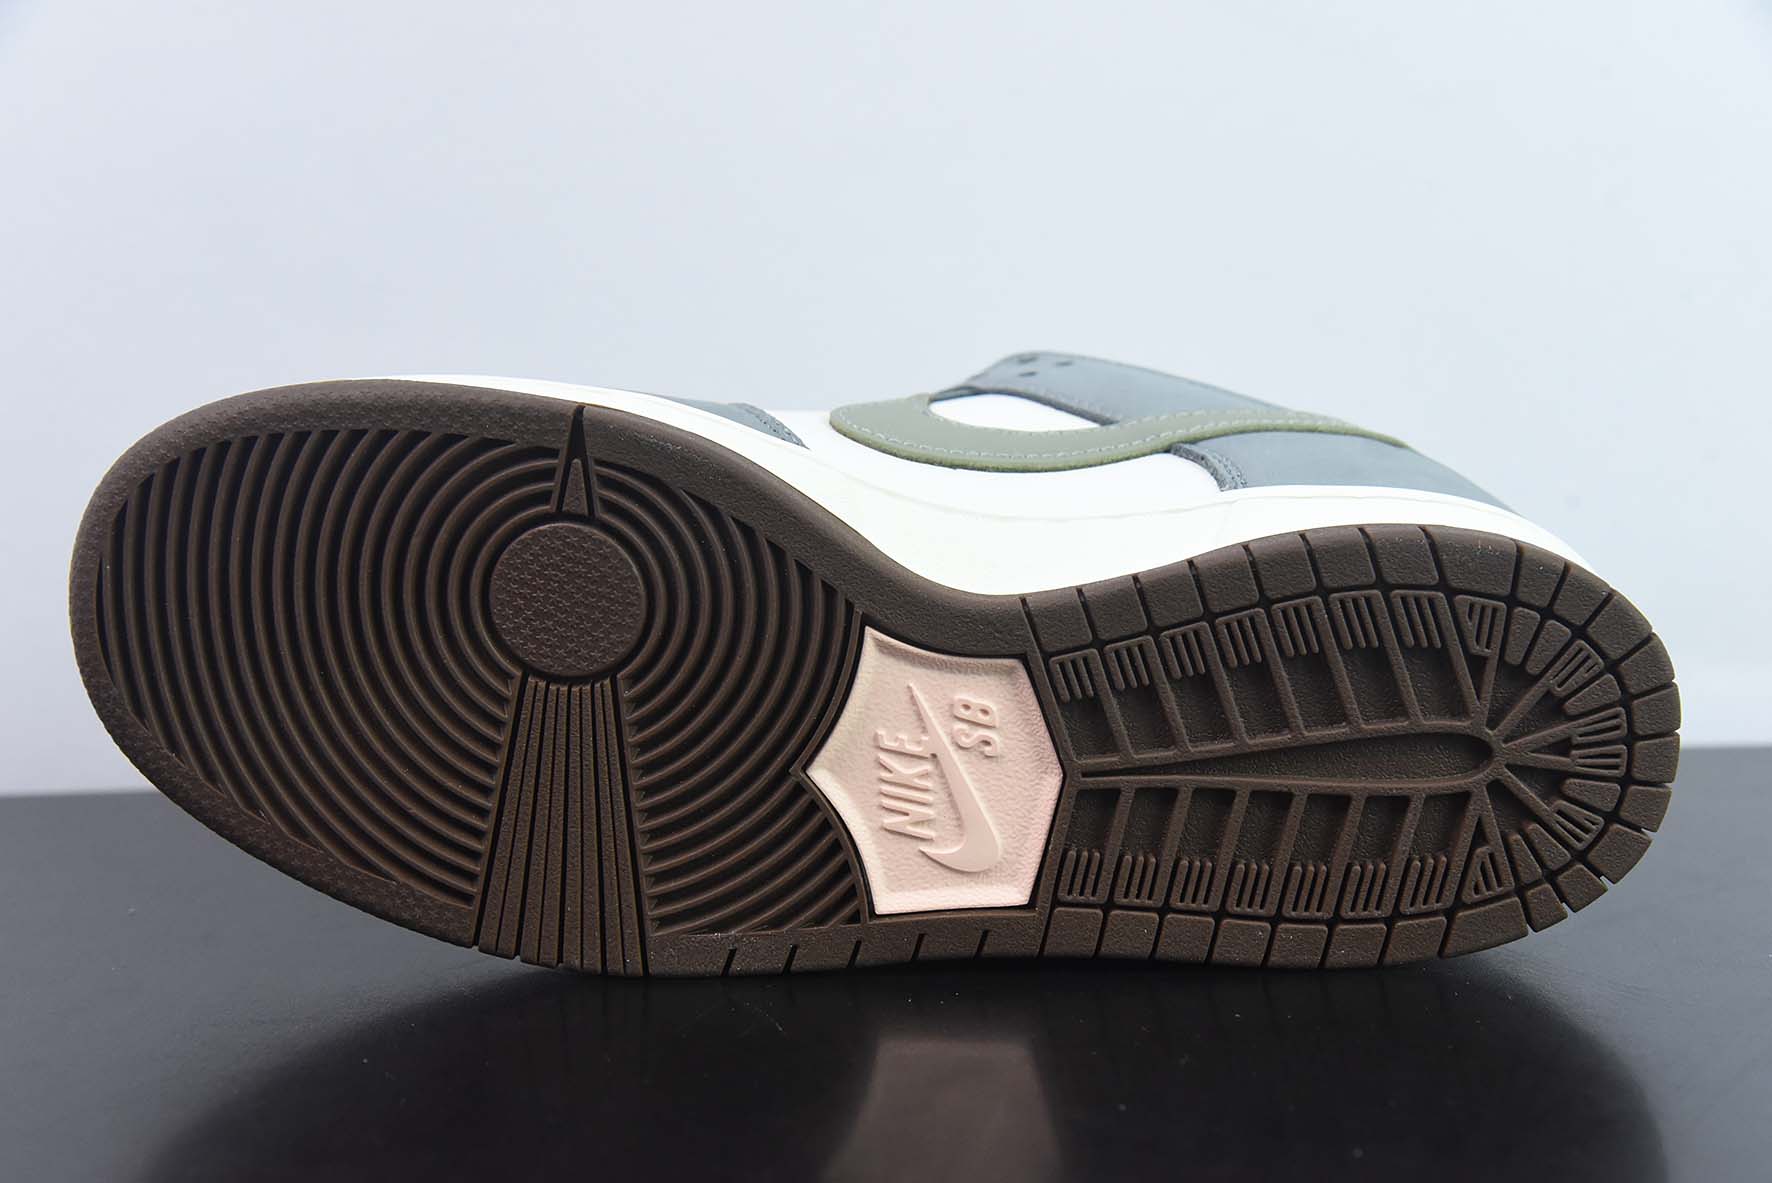 Nike Dunk Low ✖ Yuto Horigome 联名灰白羽毛低帮运动鞋 货号：FQ1180 001